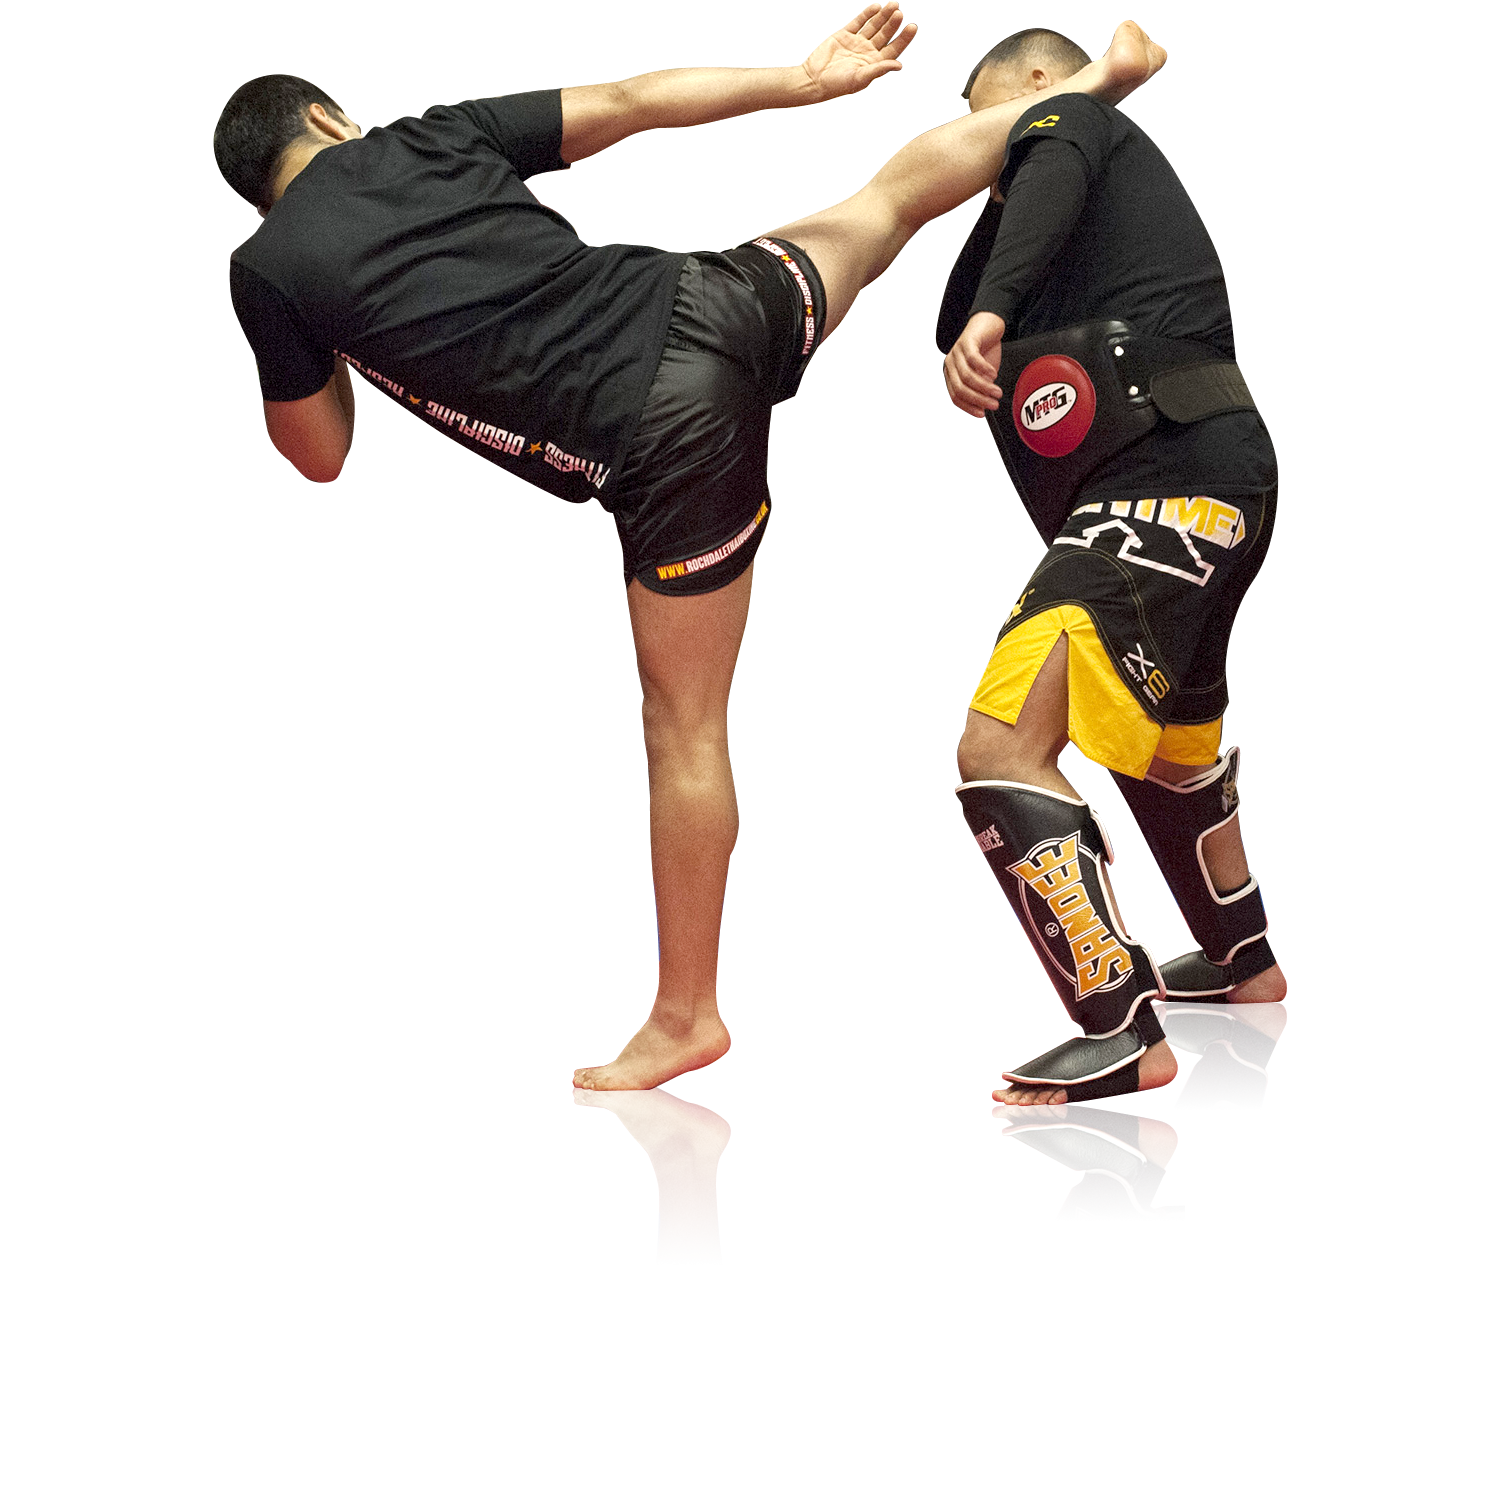 Kickboxing  Transparent Image